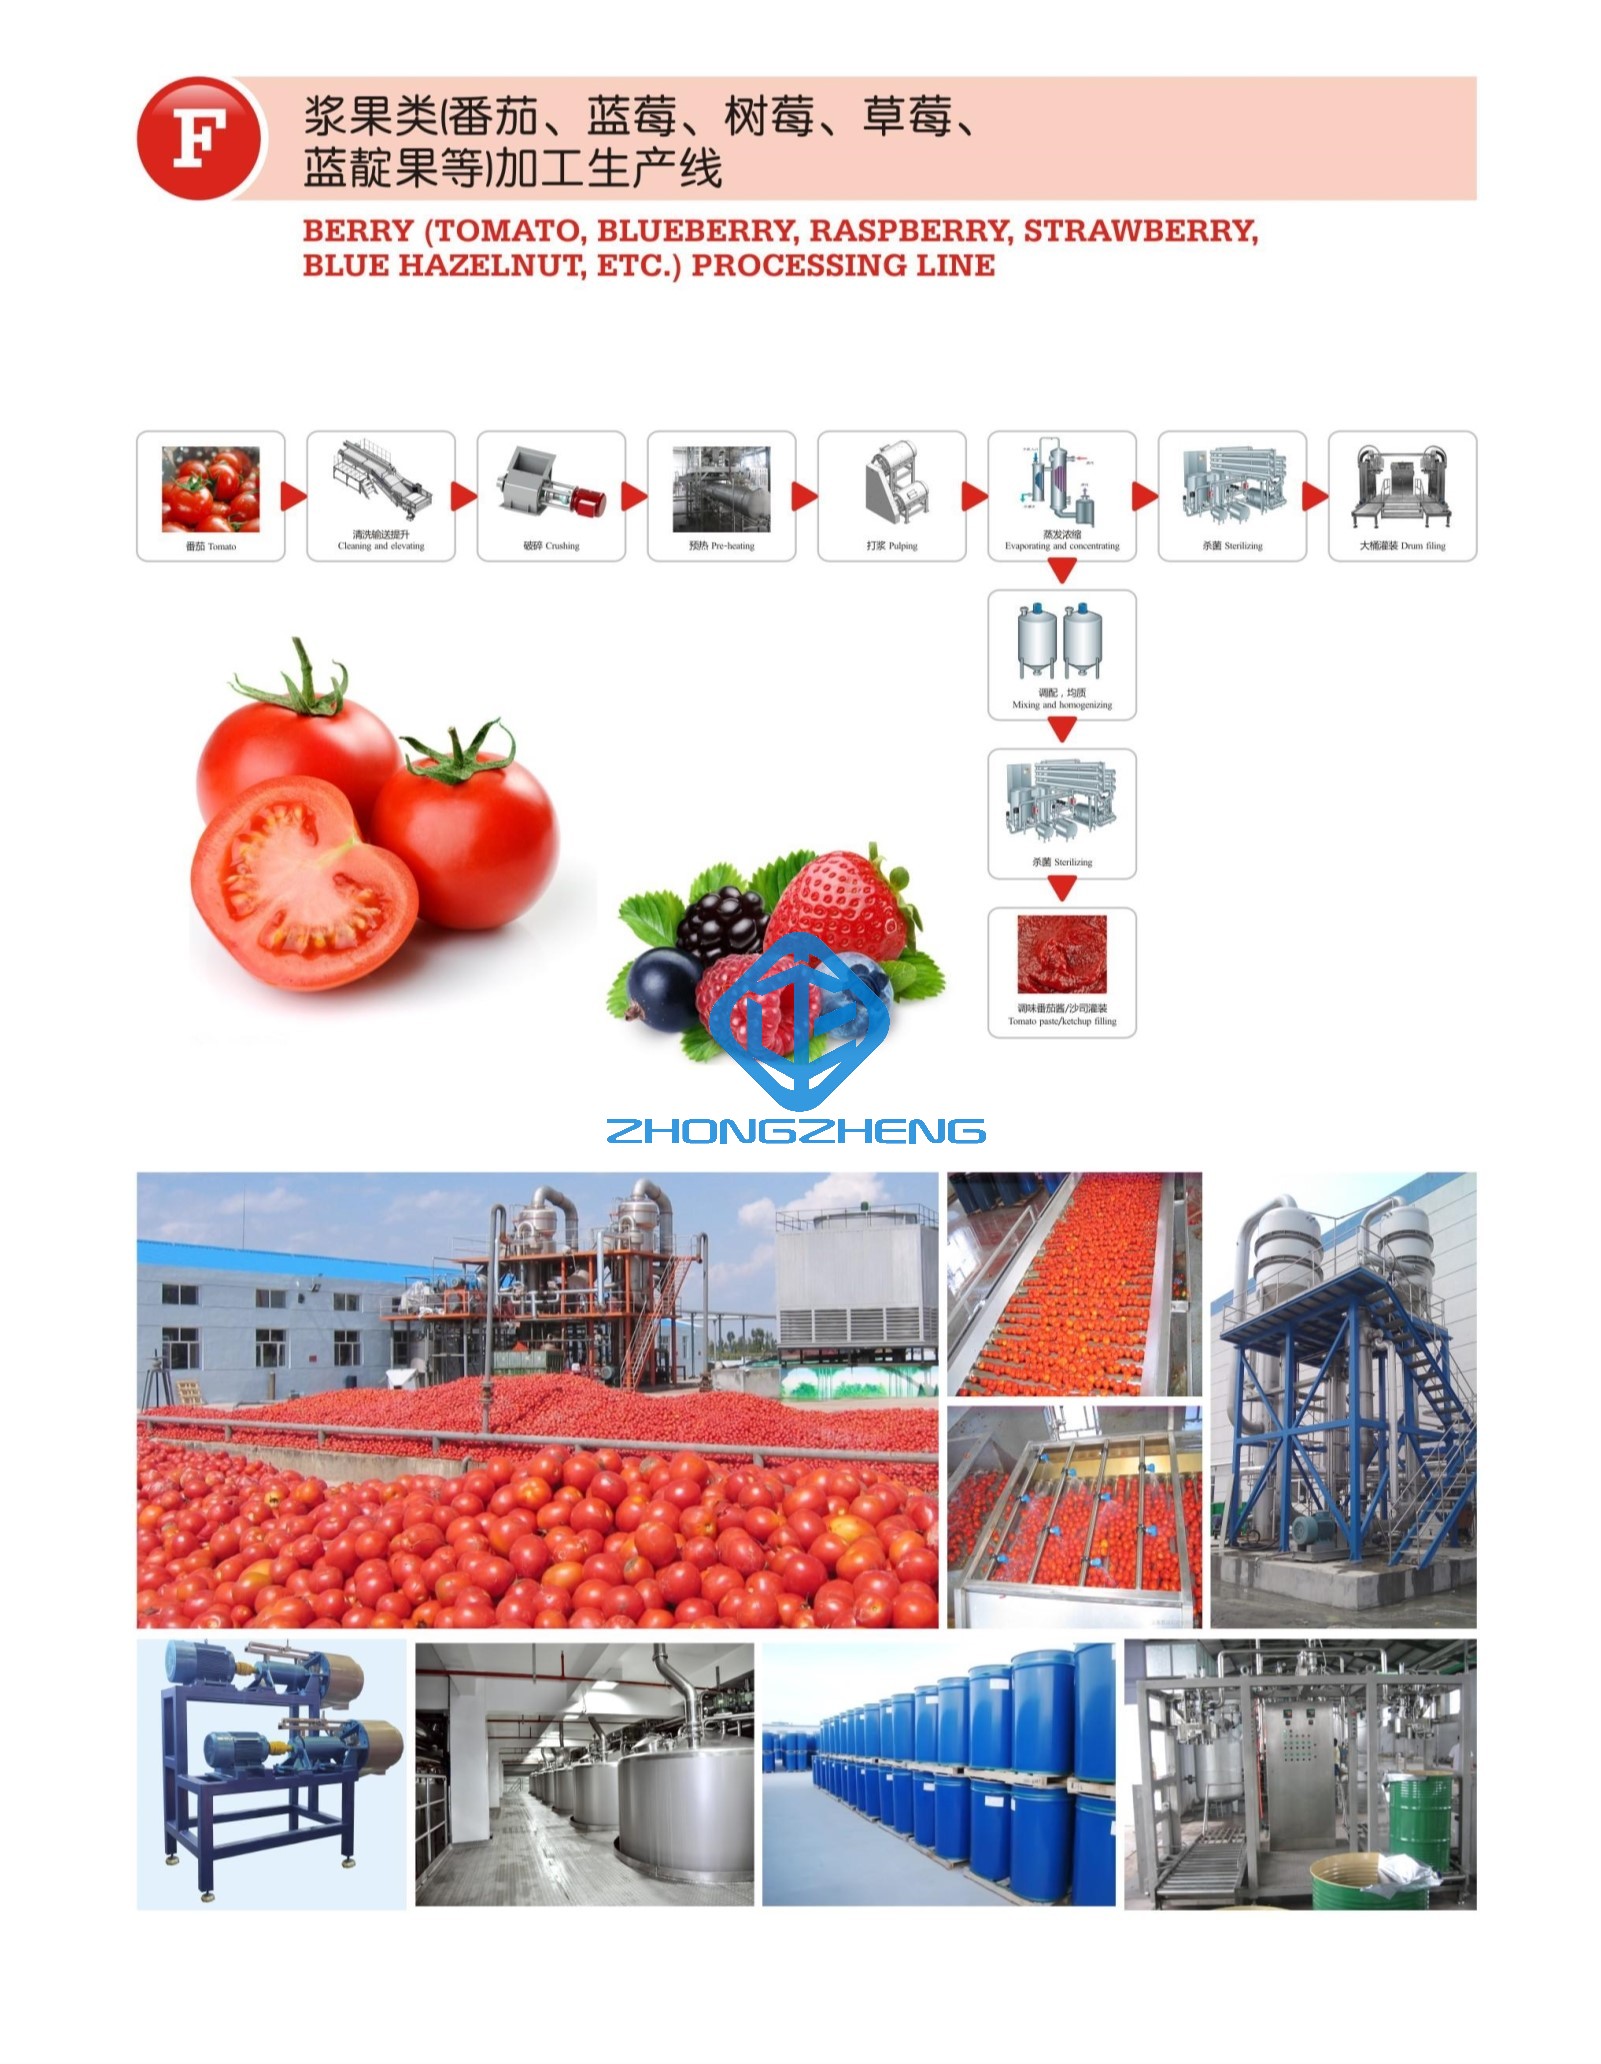 Berry (tomato Blueberry, Raspberry, Strawberry, Nut, Etc.) Processing Line